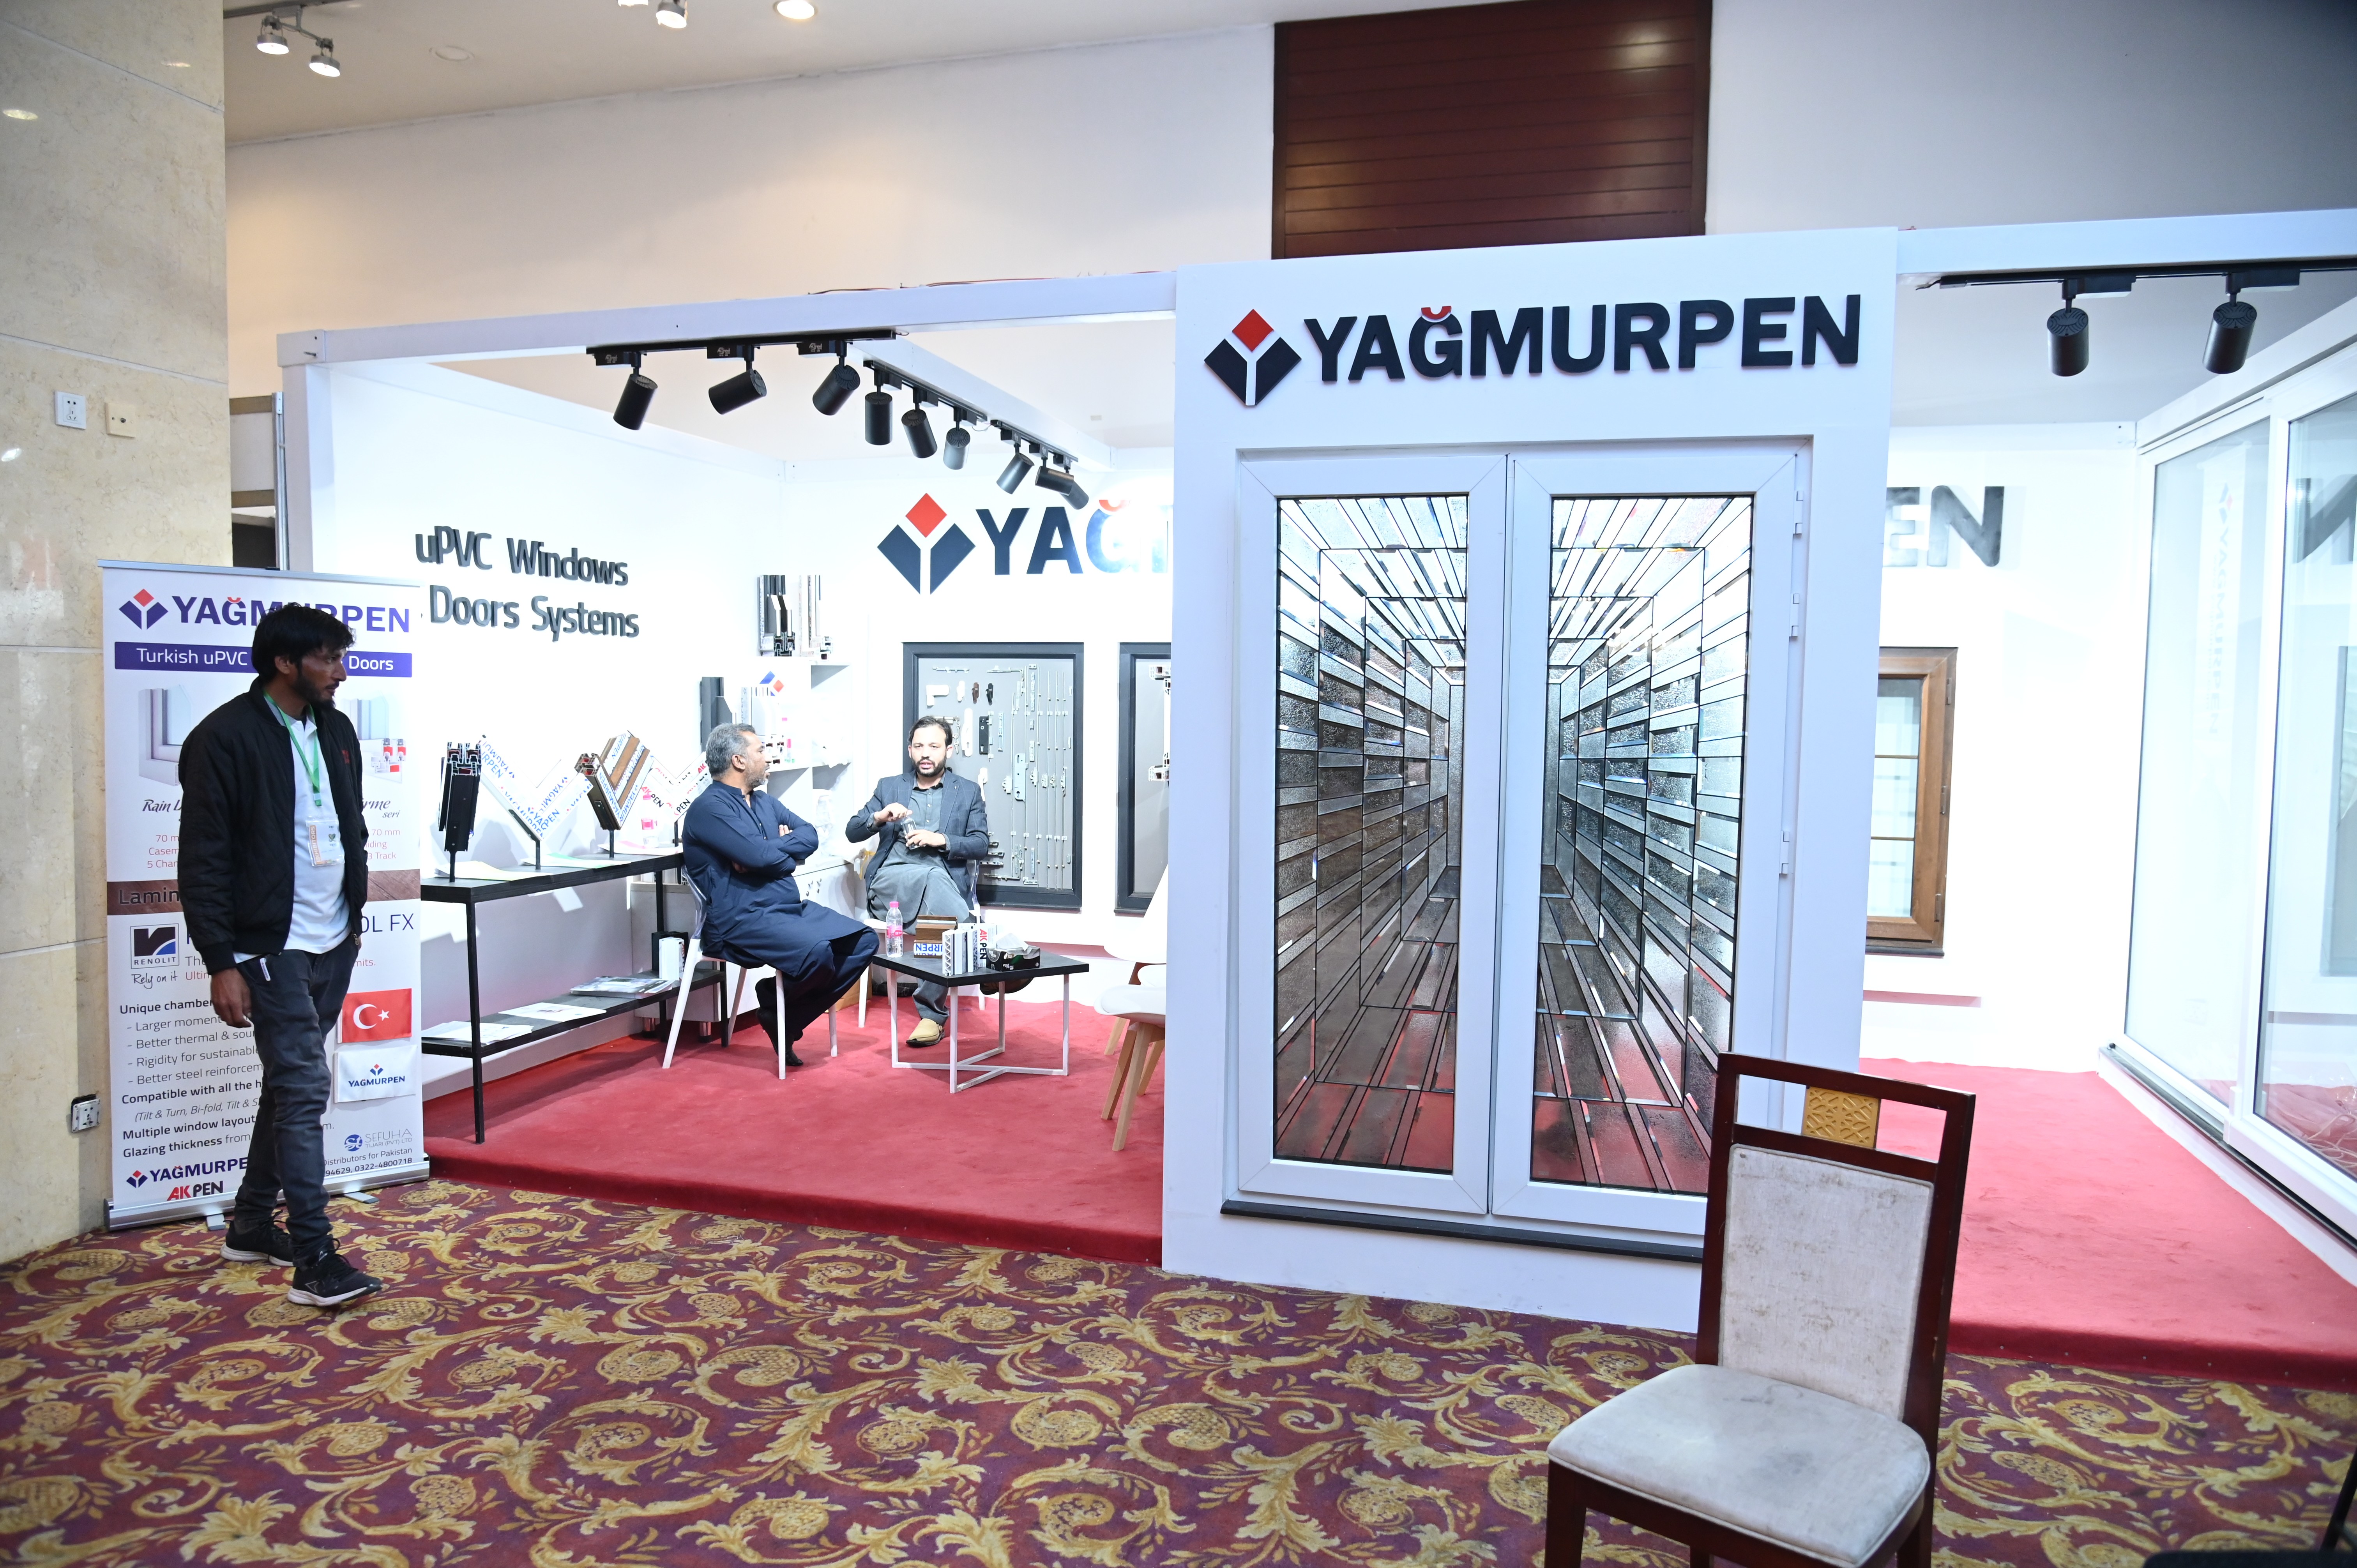 The compartment of Yağmurpen